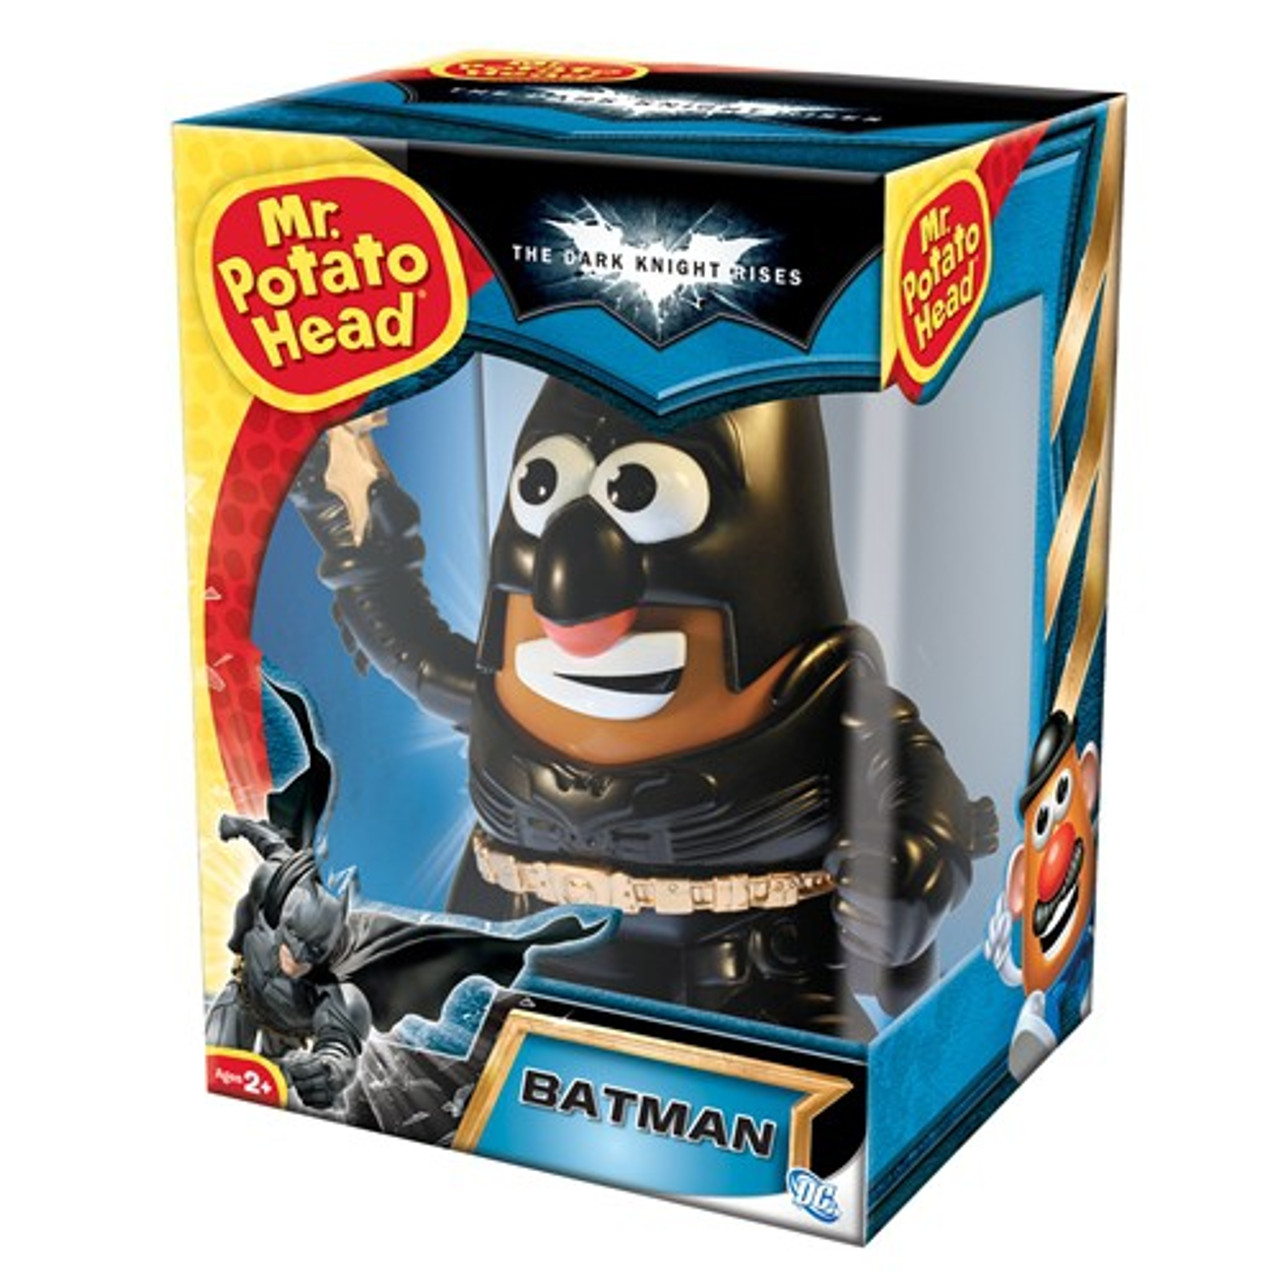 Batman potato head